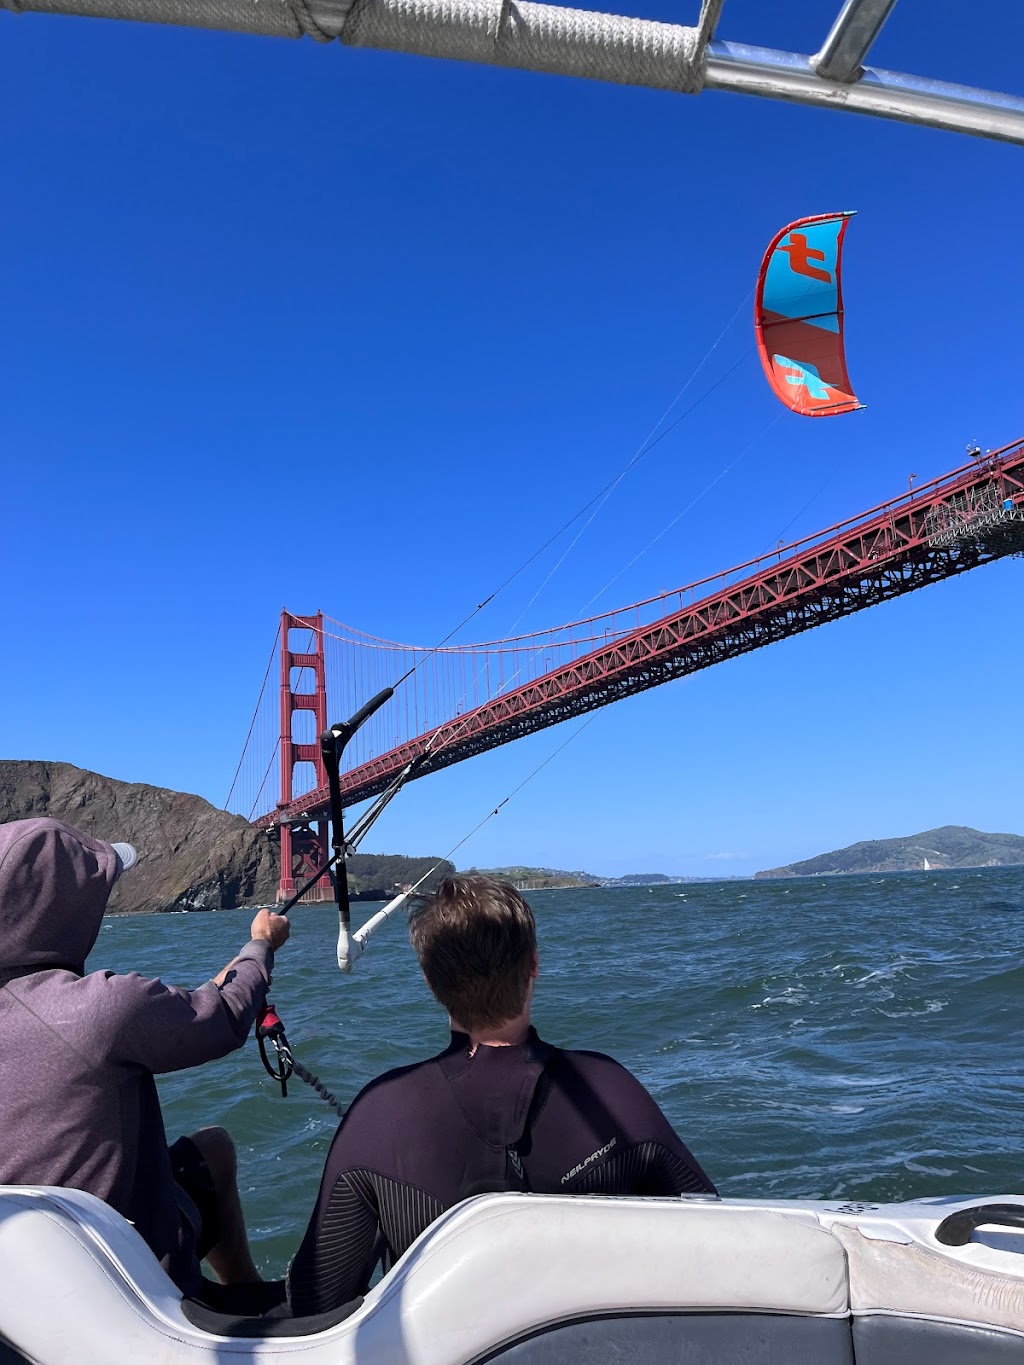 KiteTheBay | 1 Clipper Cove Way, San Francisco, CA 94130 | Phone: (415) 295-5483